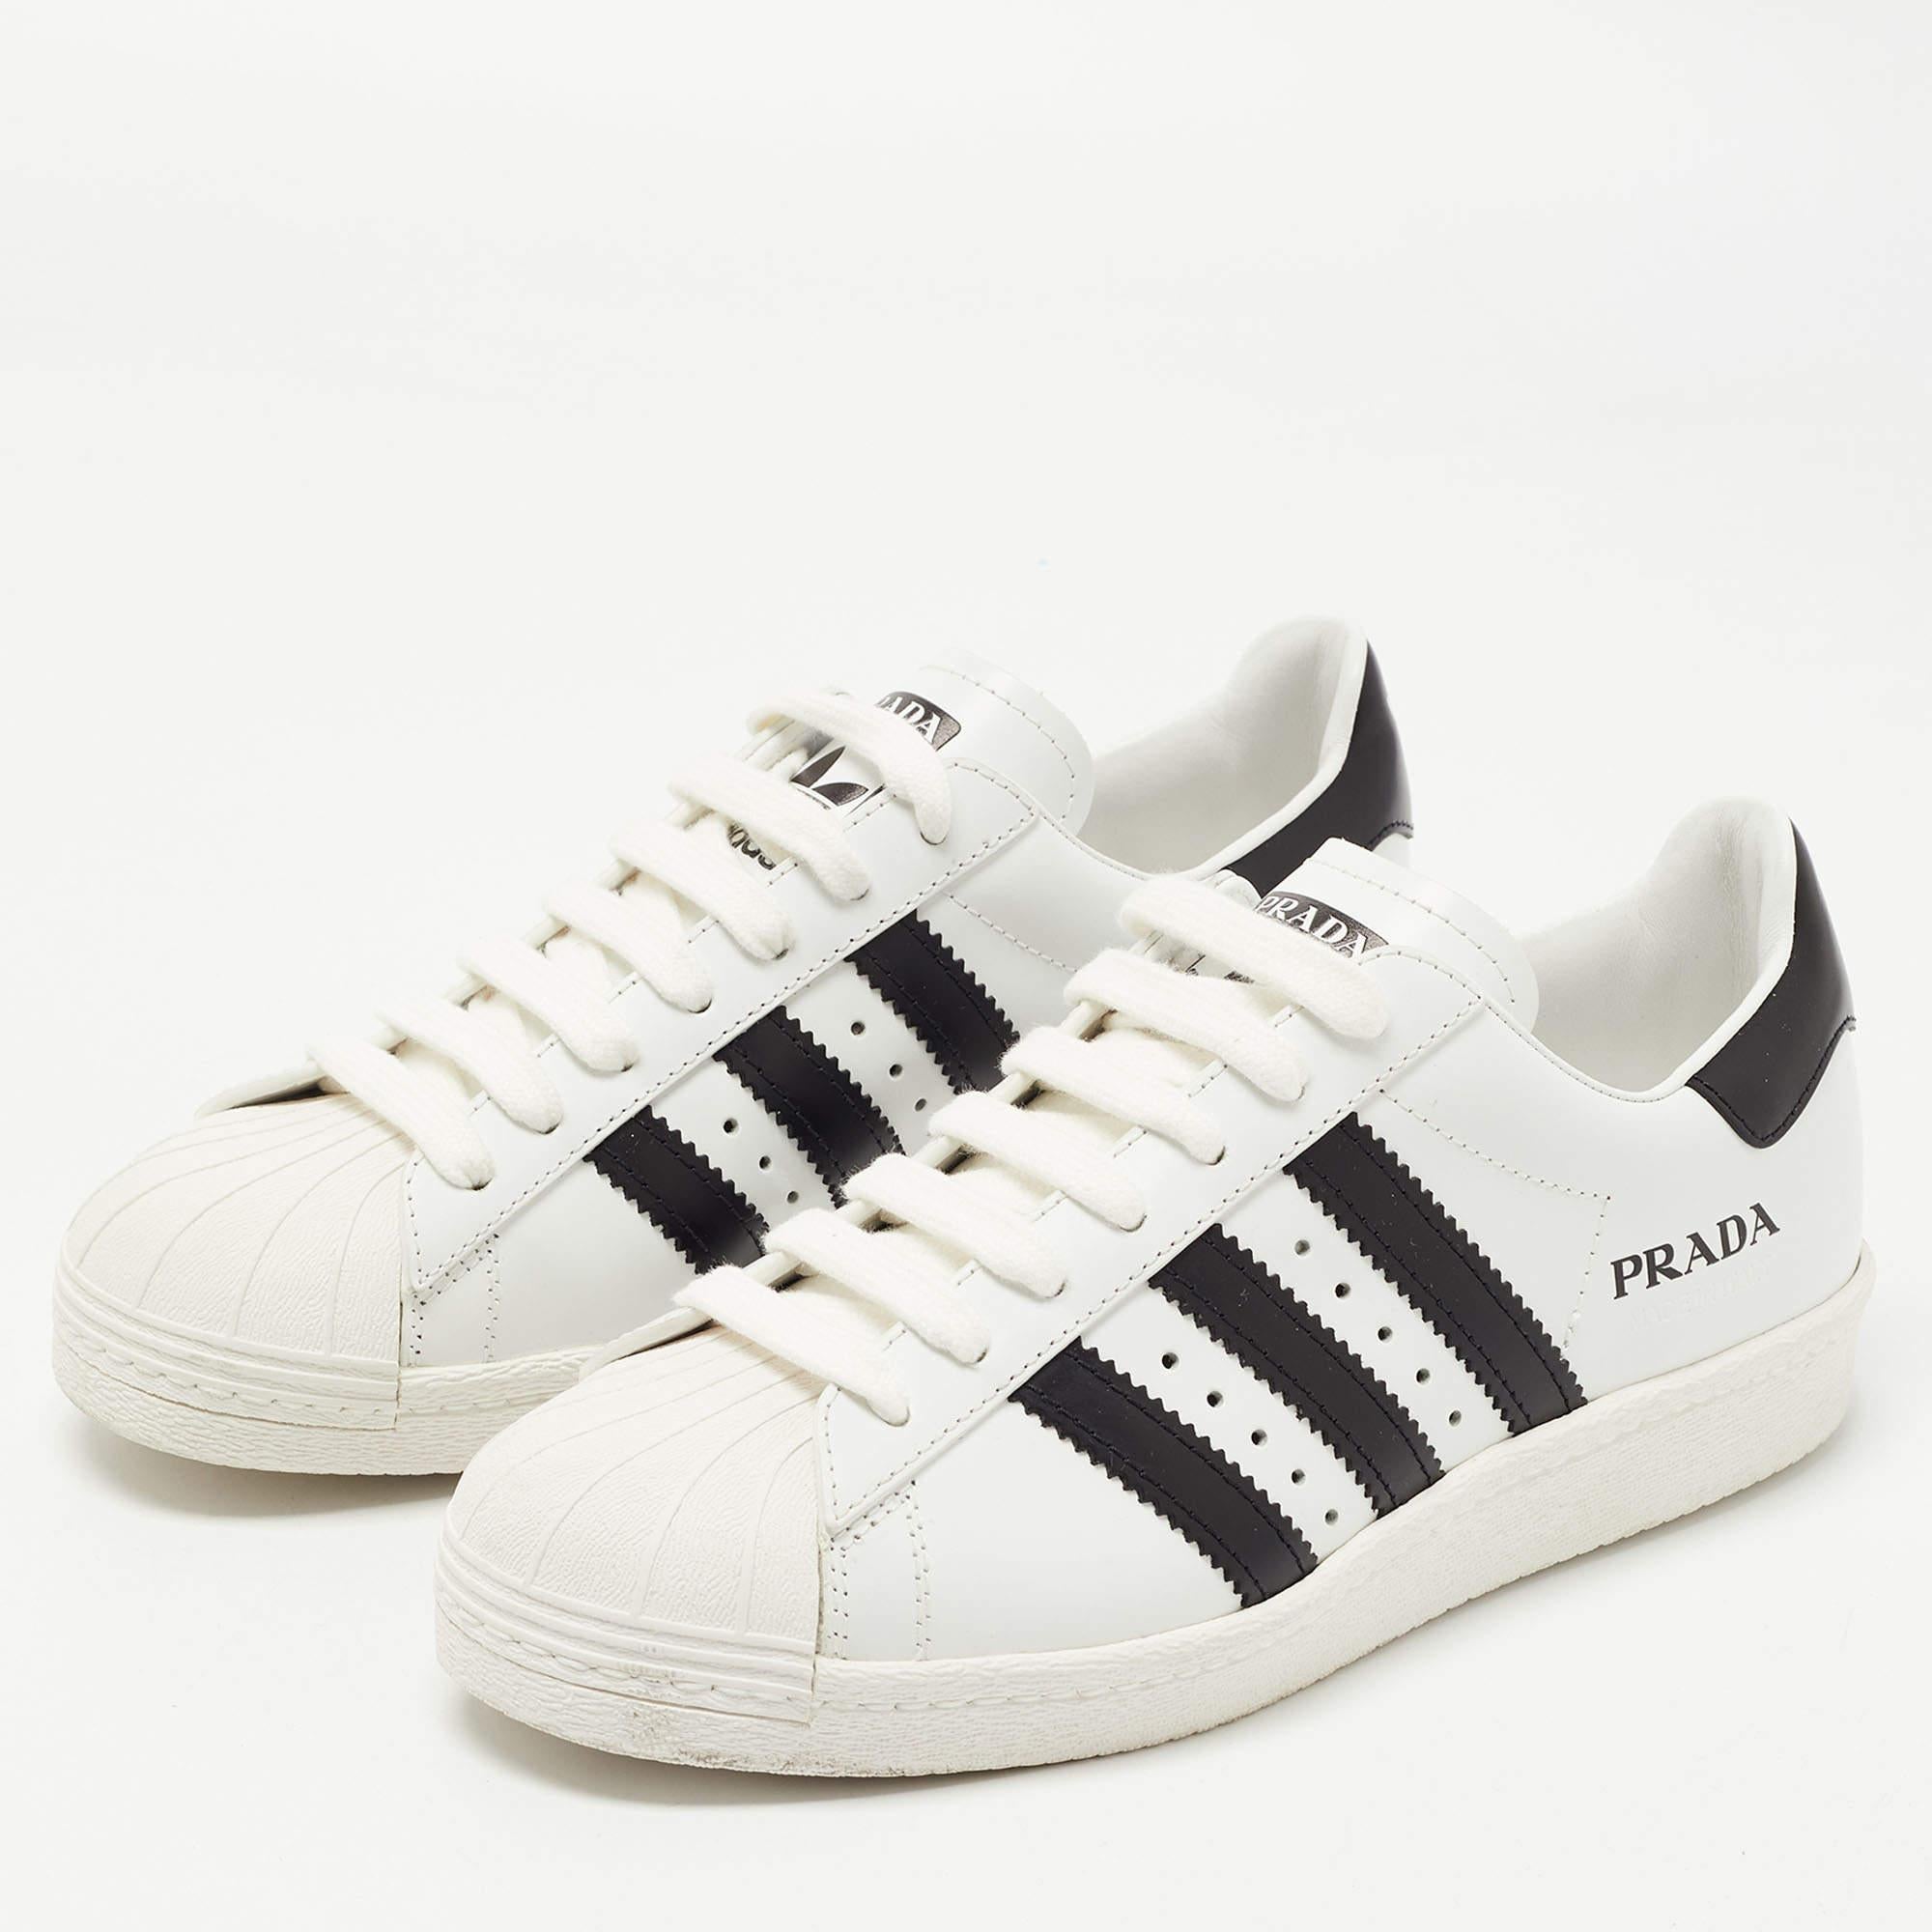 Women's Prada x Adidas White/Black Leather Superstar Sneakers Size 37 1/3